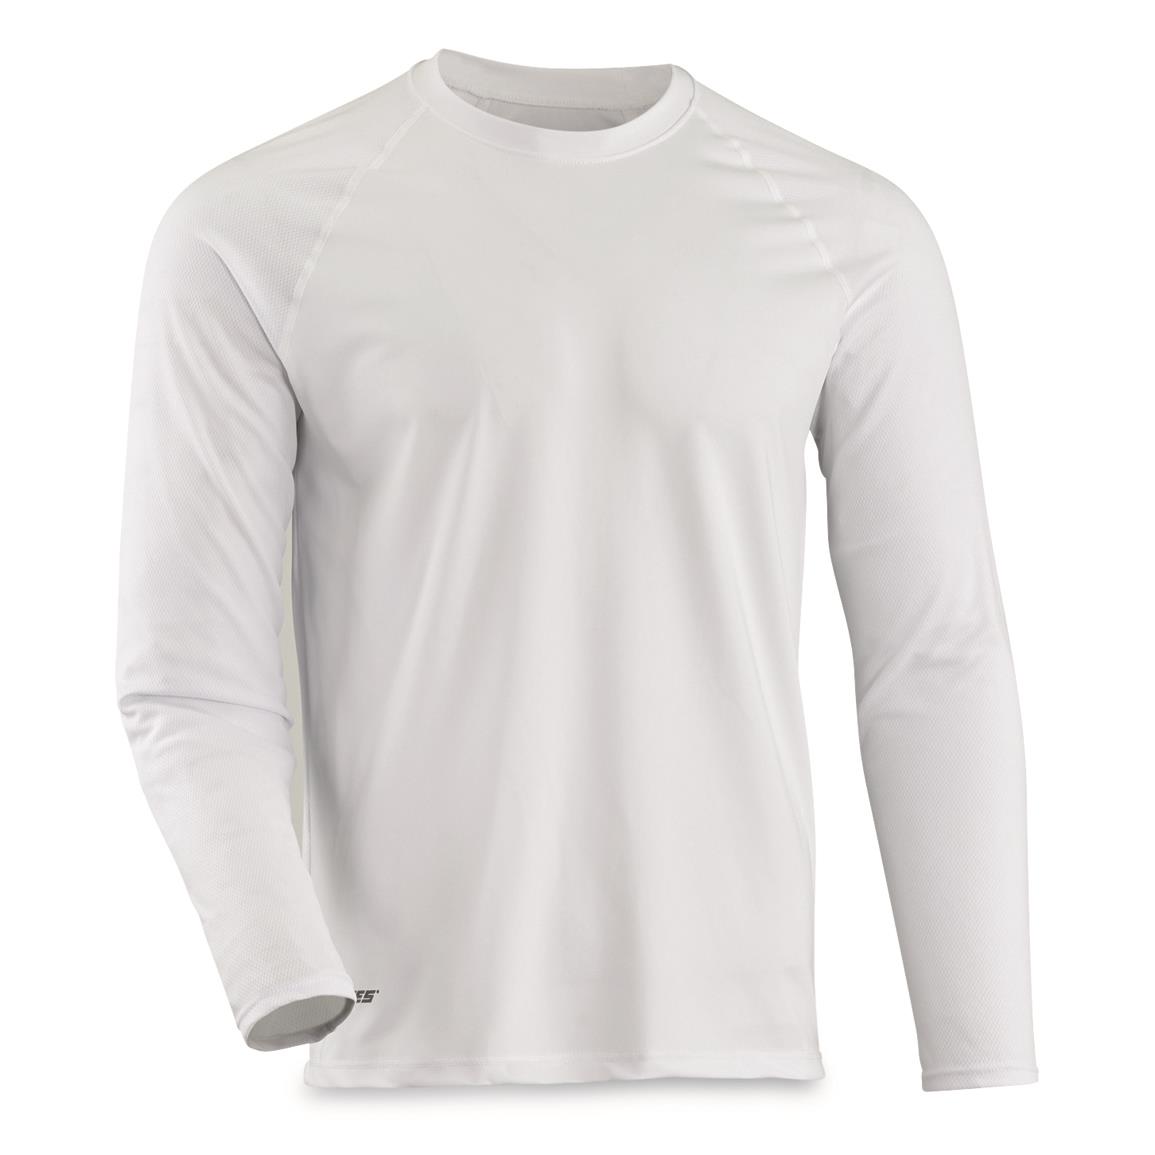 U.S. Military Surplus Bates Long Sleeve Performance Shirts, 2 pack, New, White